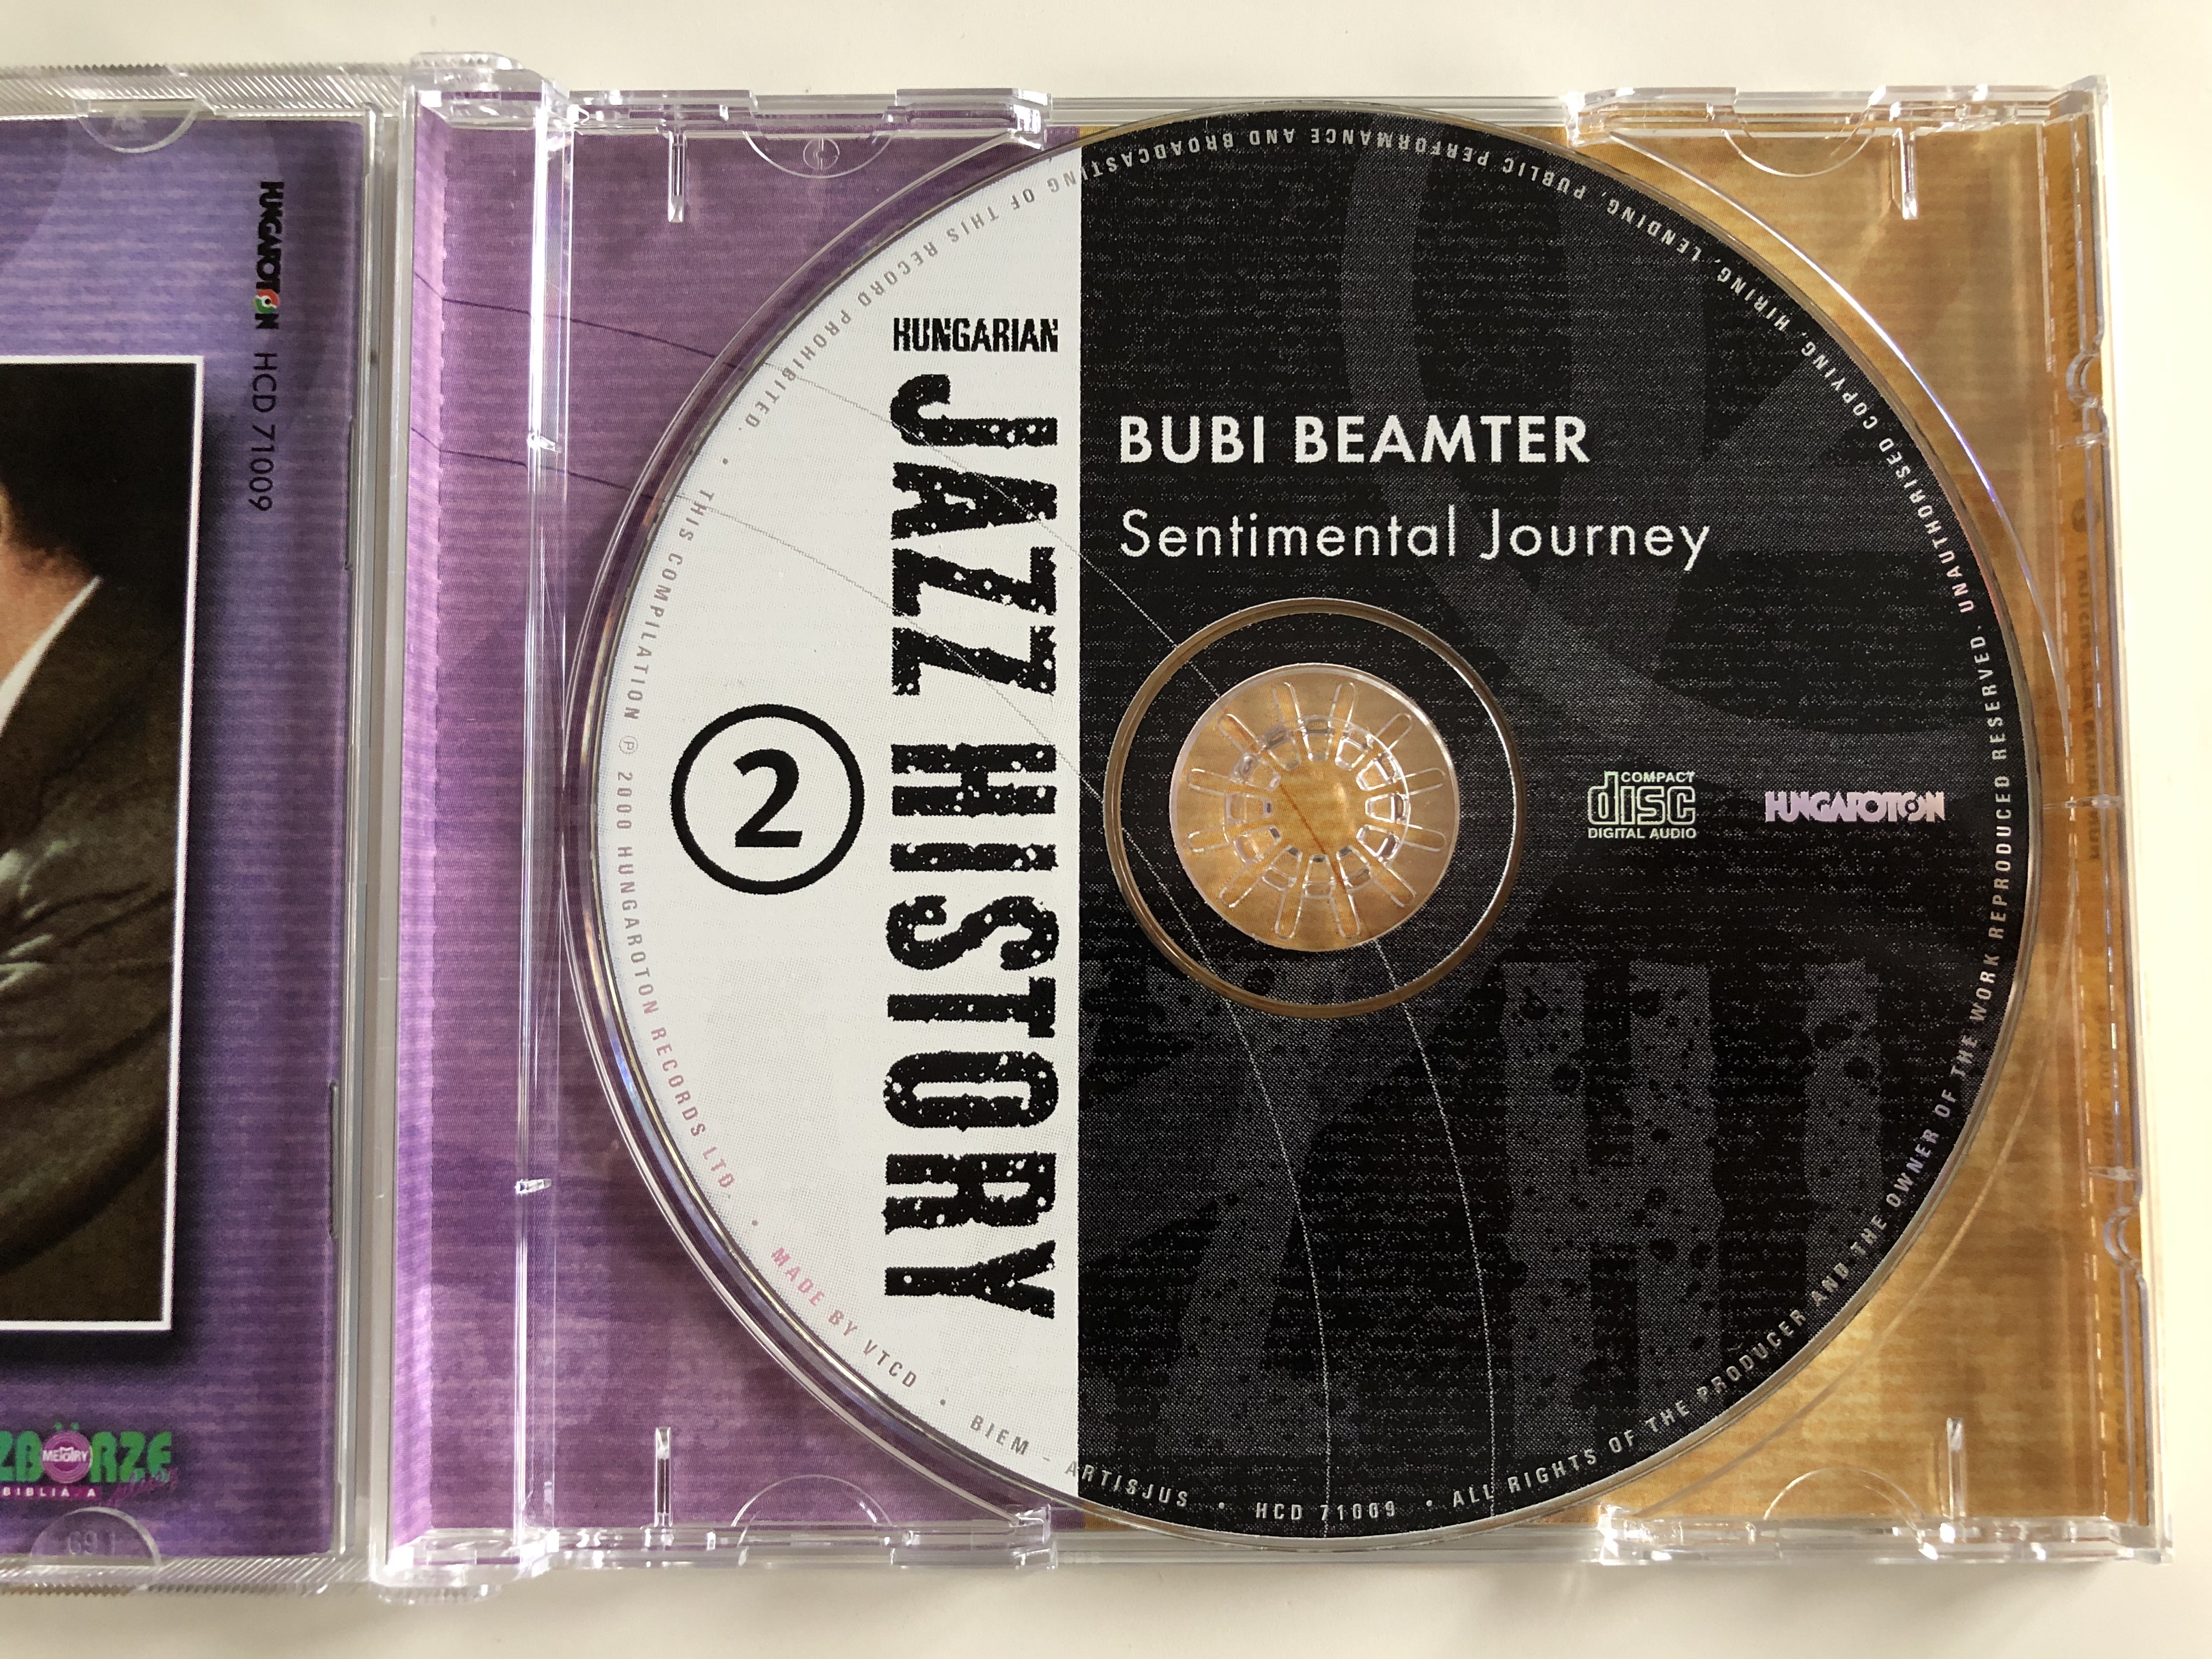 bubi-beamter-sentimental-journey-hungarian-jazz-history-2-hungaroton-audio-cd-2000-hcd-71009-7-.jpg